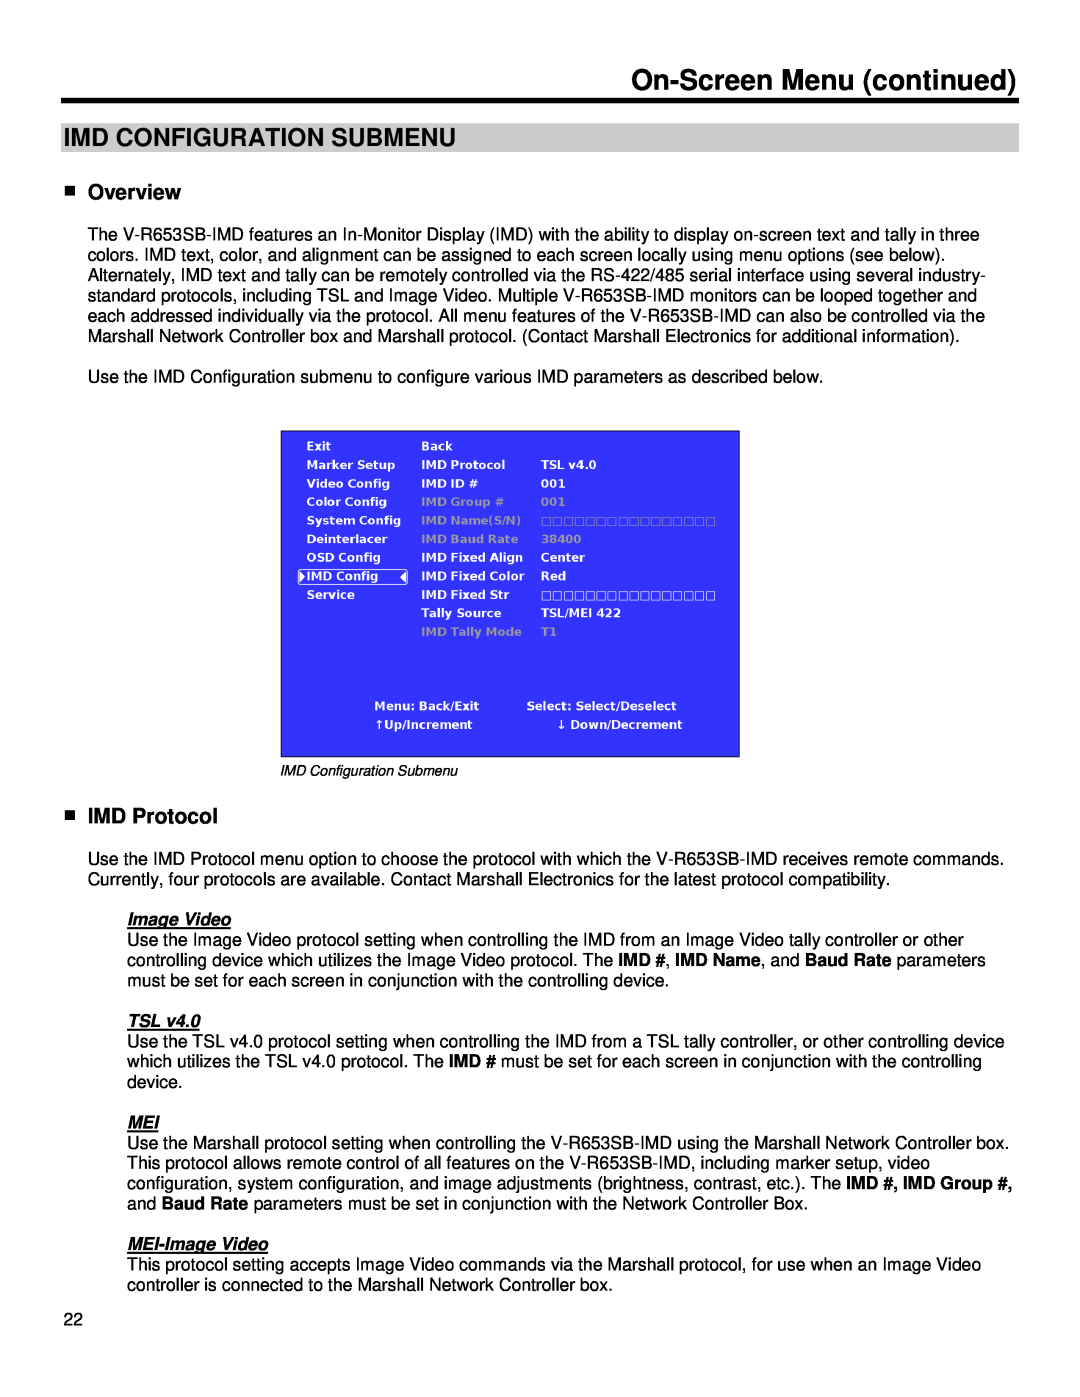 Marshall electronic V-R653SB-IMD manual Imd Configuration Submenu, Overview, IMD Protocol, MEI-Image Video 